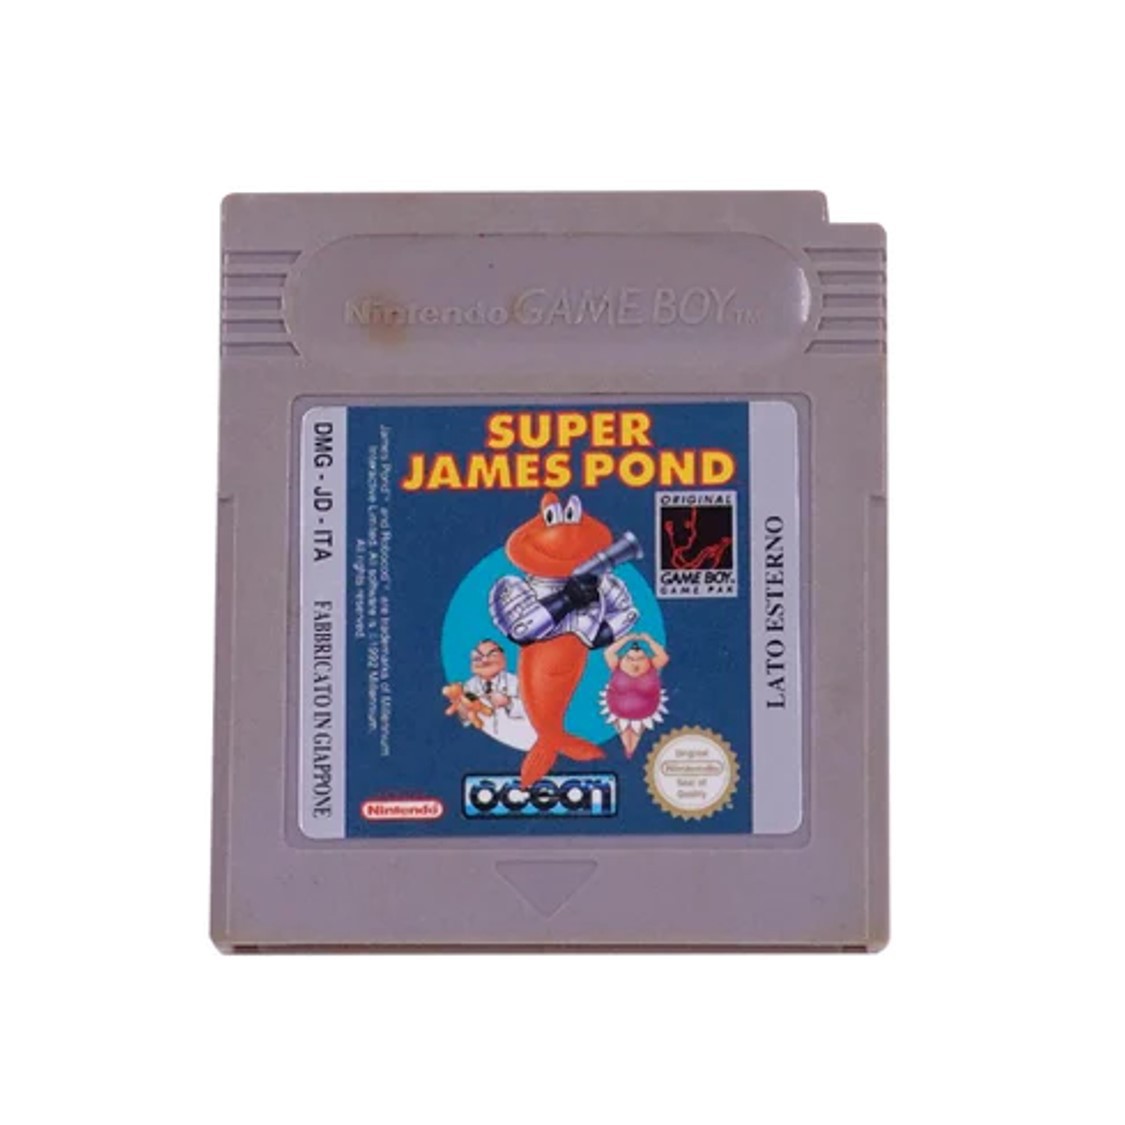 Super James Pond - Gameboy Classic Games